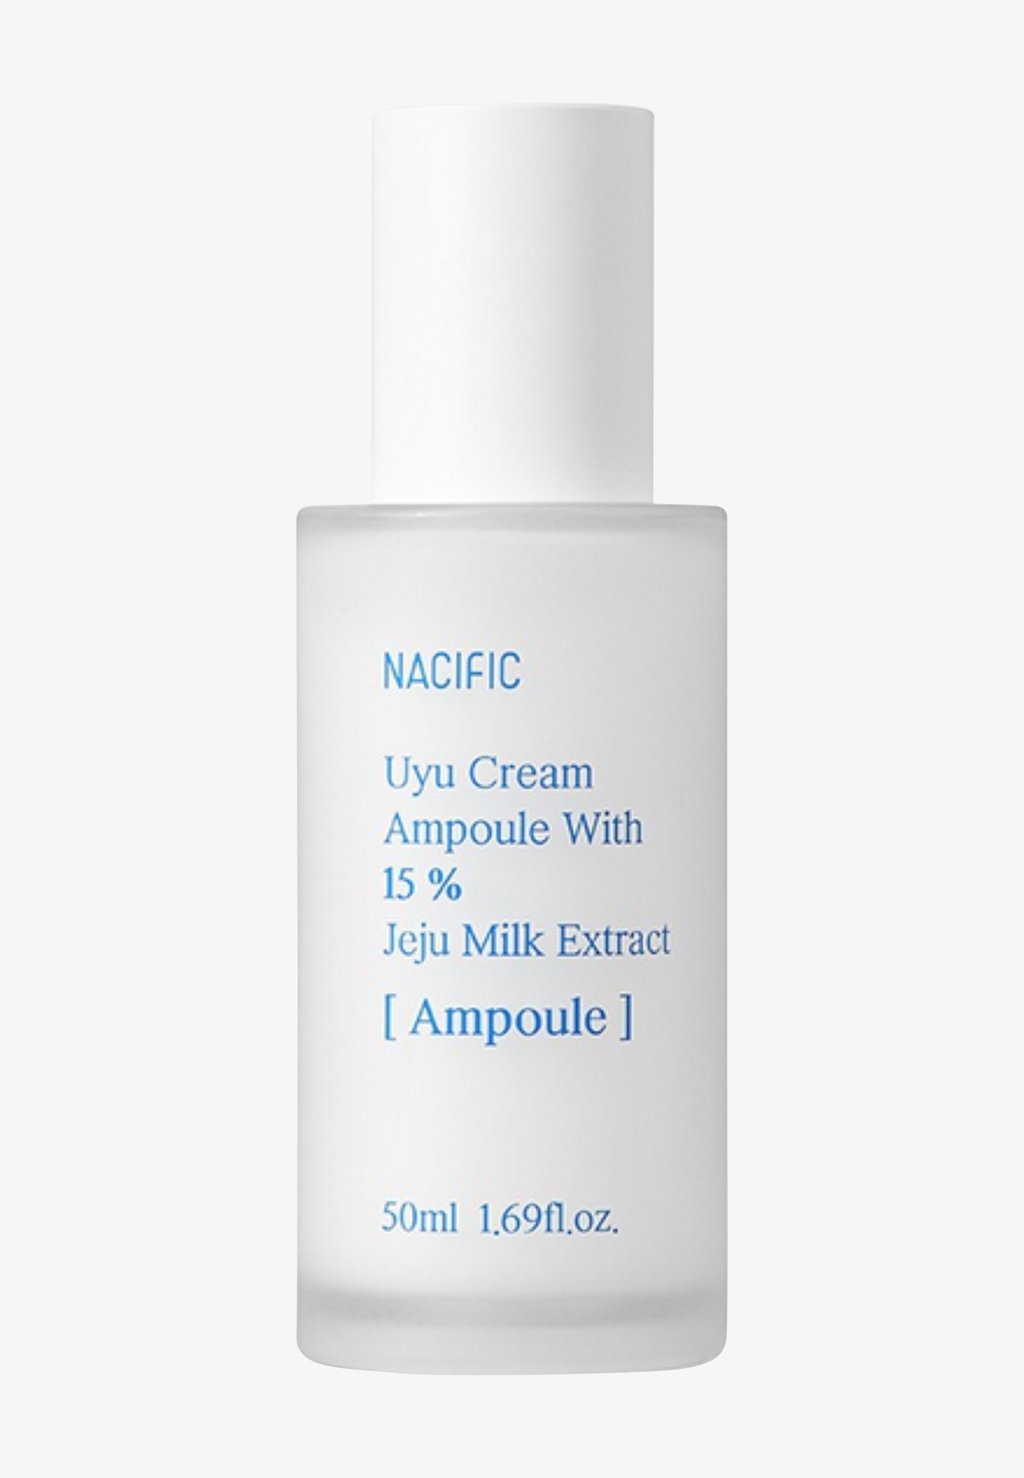 Дневной крем Uyu Cream Ampoule NACIFIC